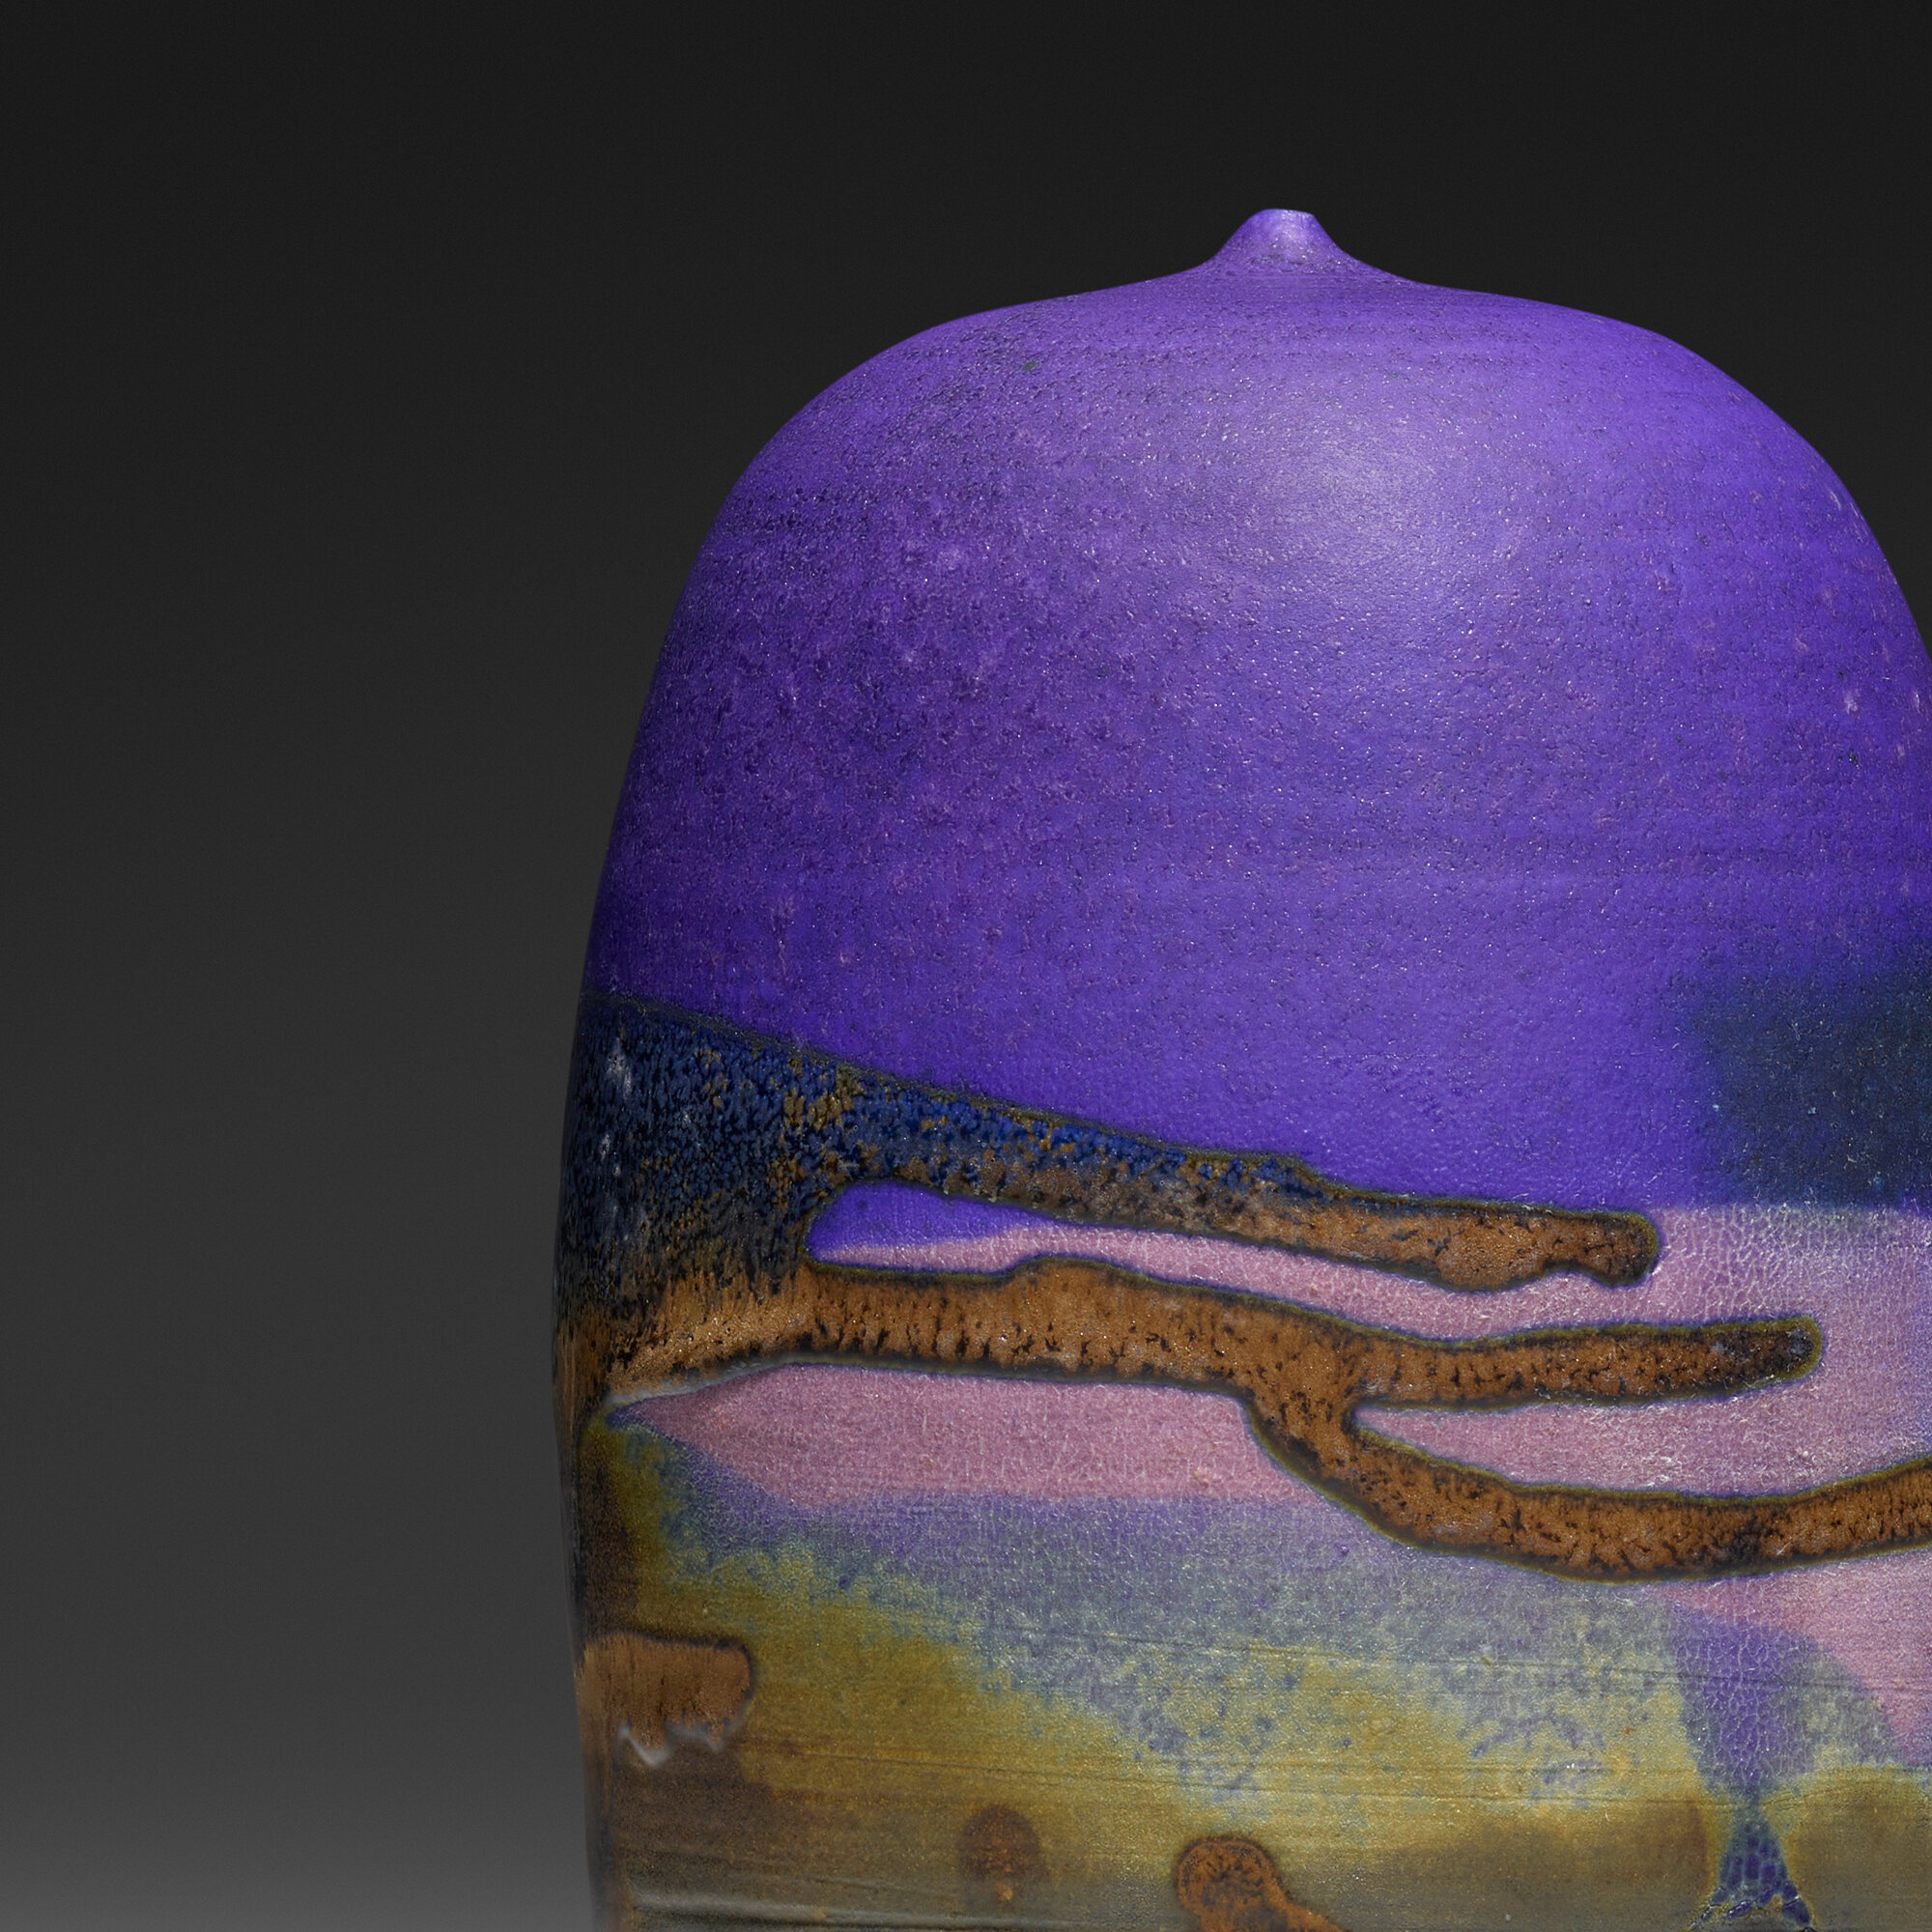 155: TOSHIKO TAKAEZU, Bottle < A Quiet Revolution: The Ceramics of 